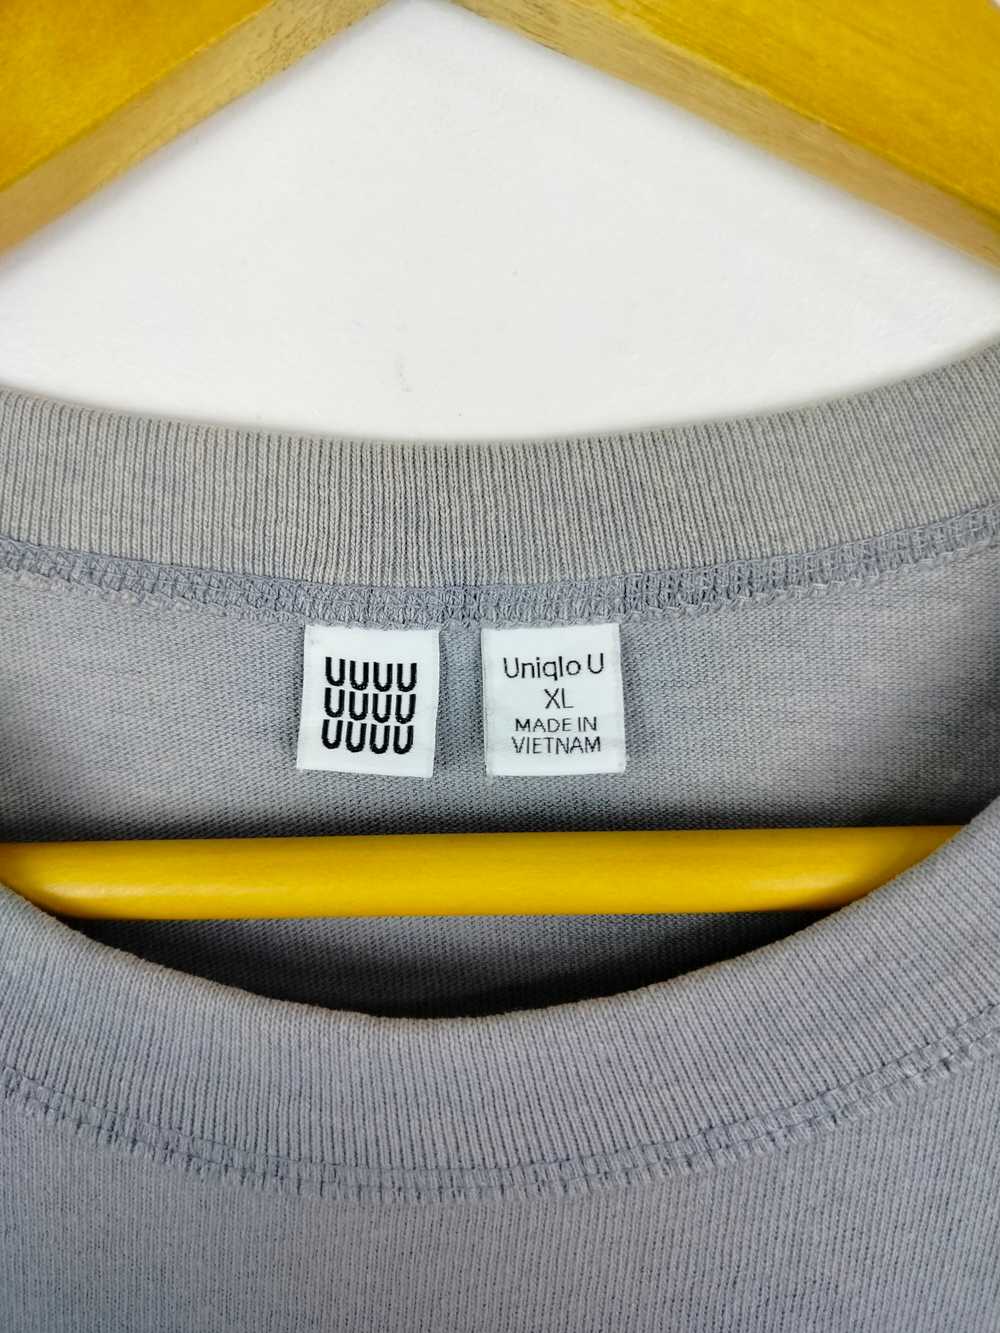 Uniqlo - Vintage Uniqlo U T-Shirt Plain Tee Lemai… - image 4